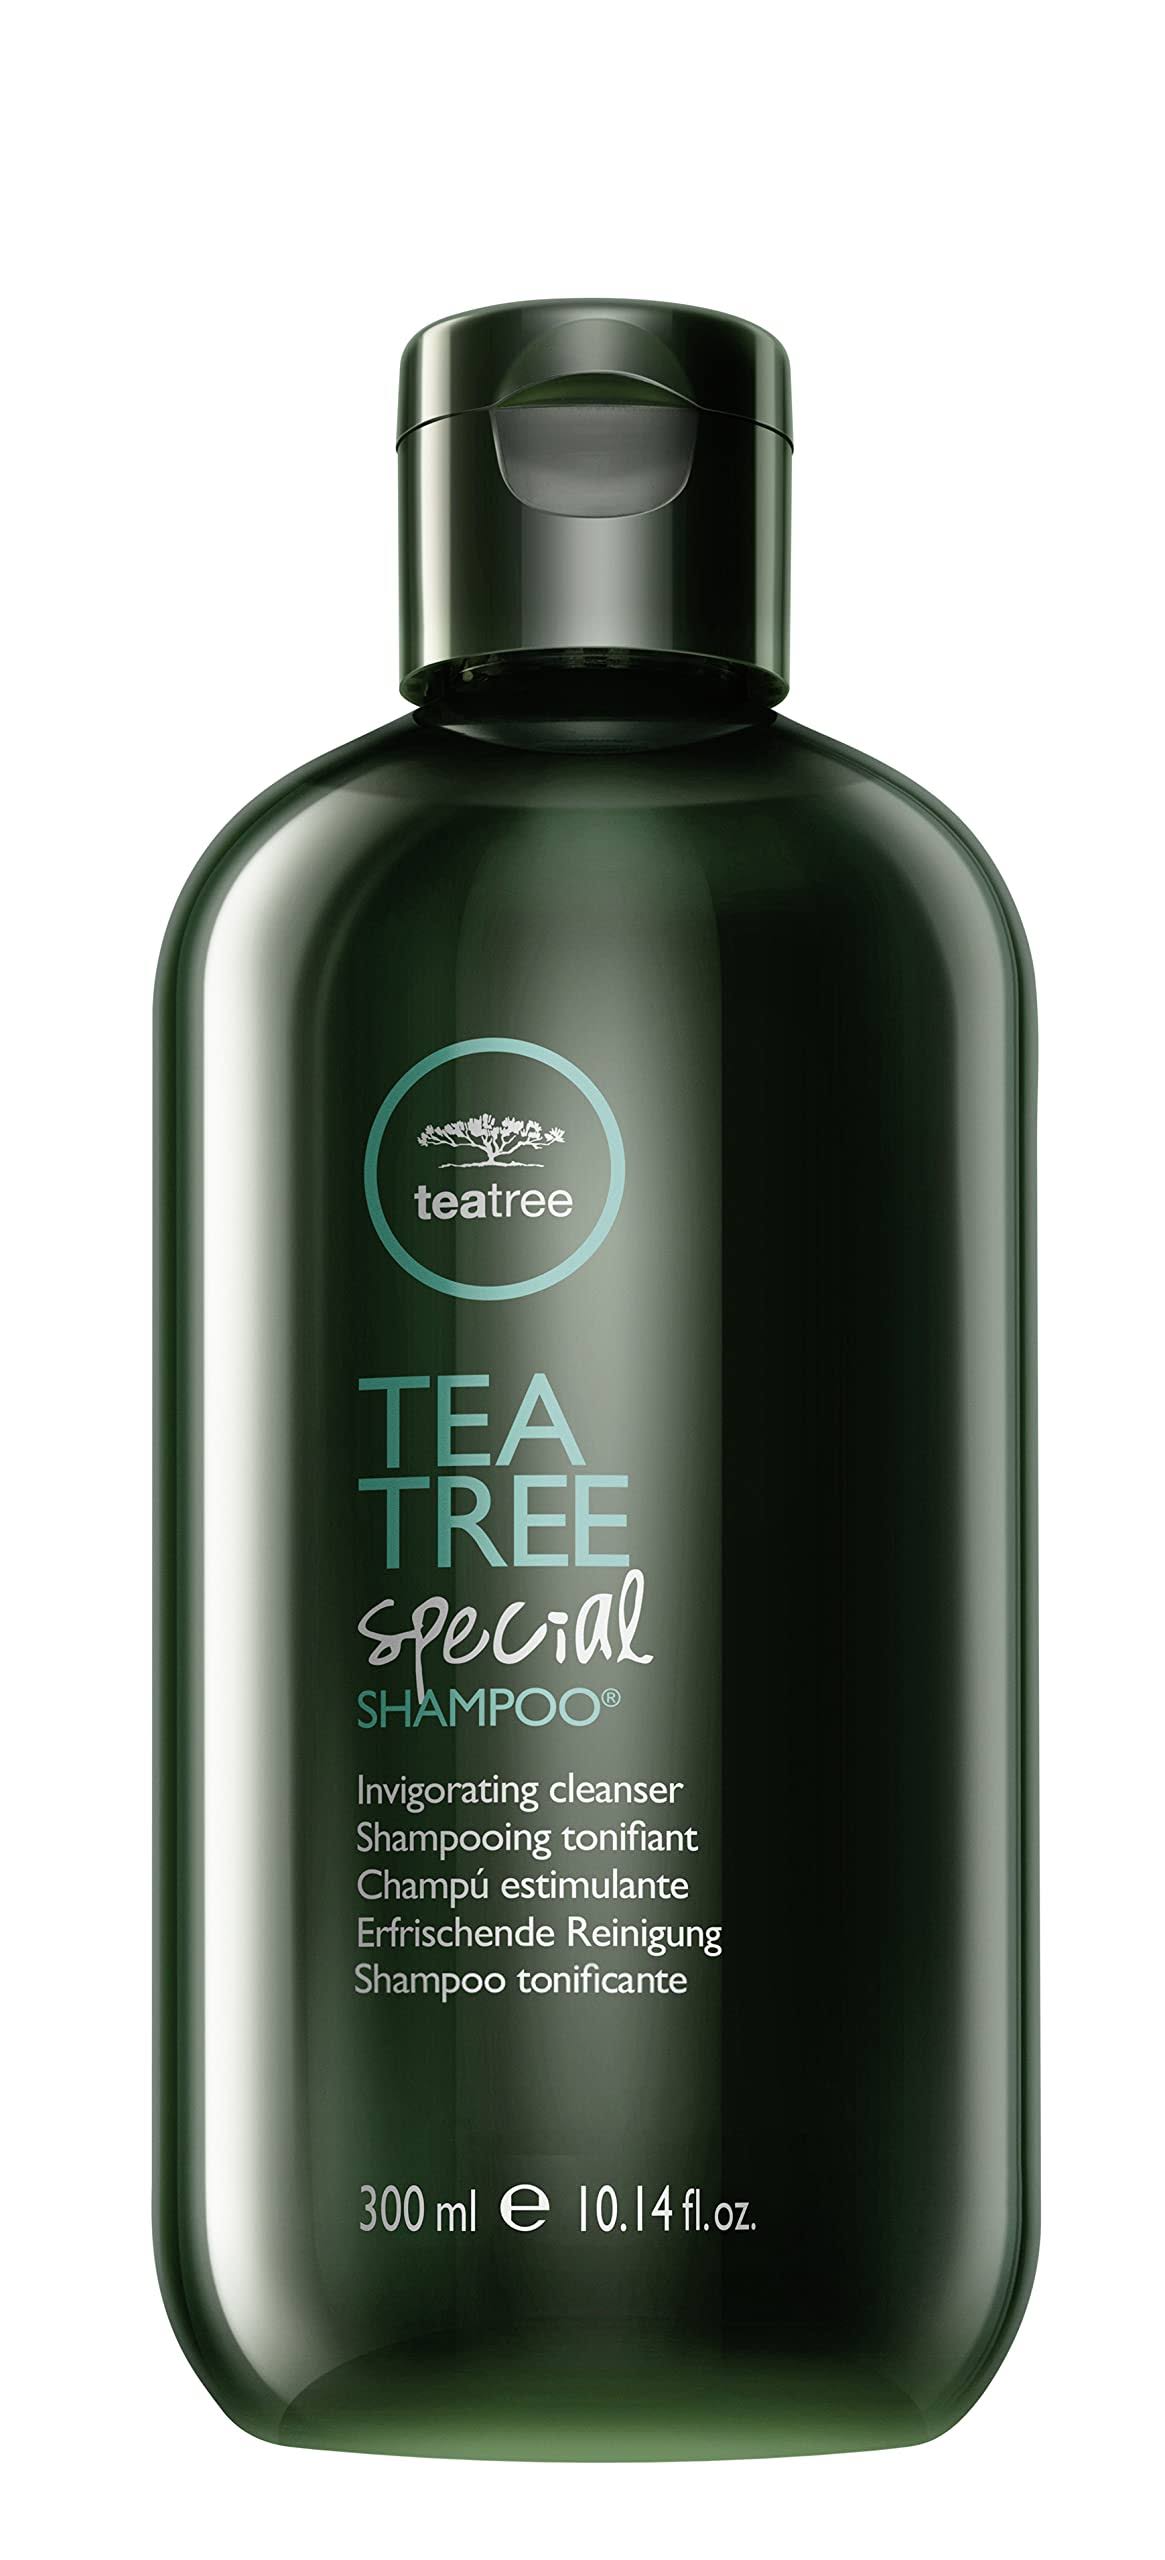 Paul Mitchell Special Shampoo - 300ml, Tea Tree